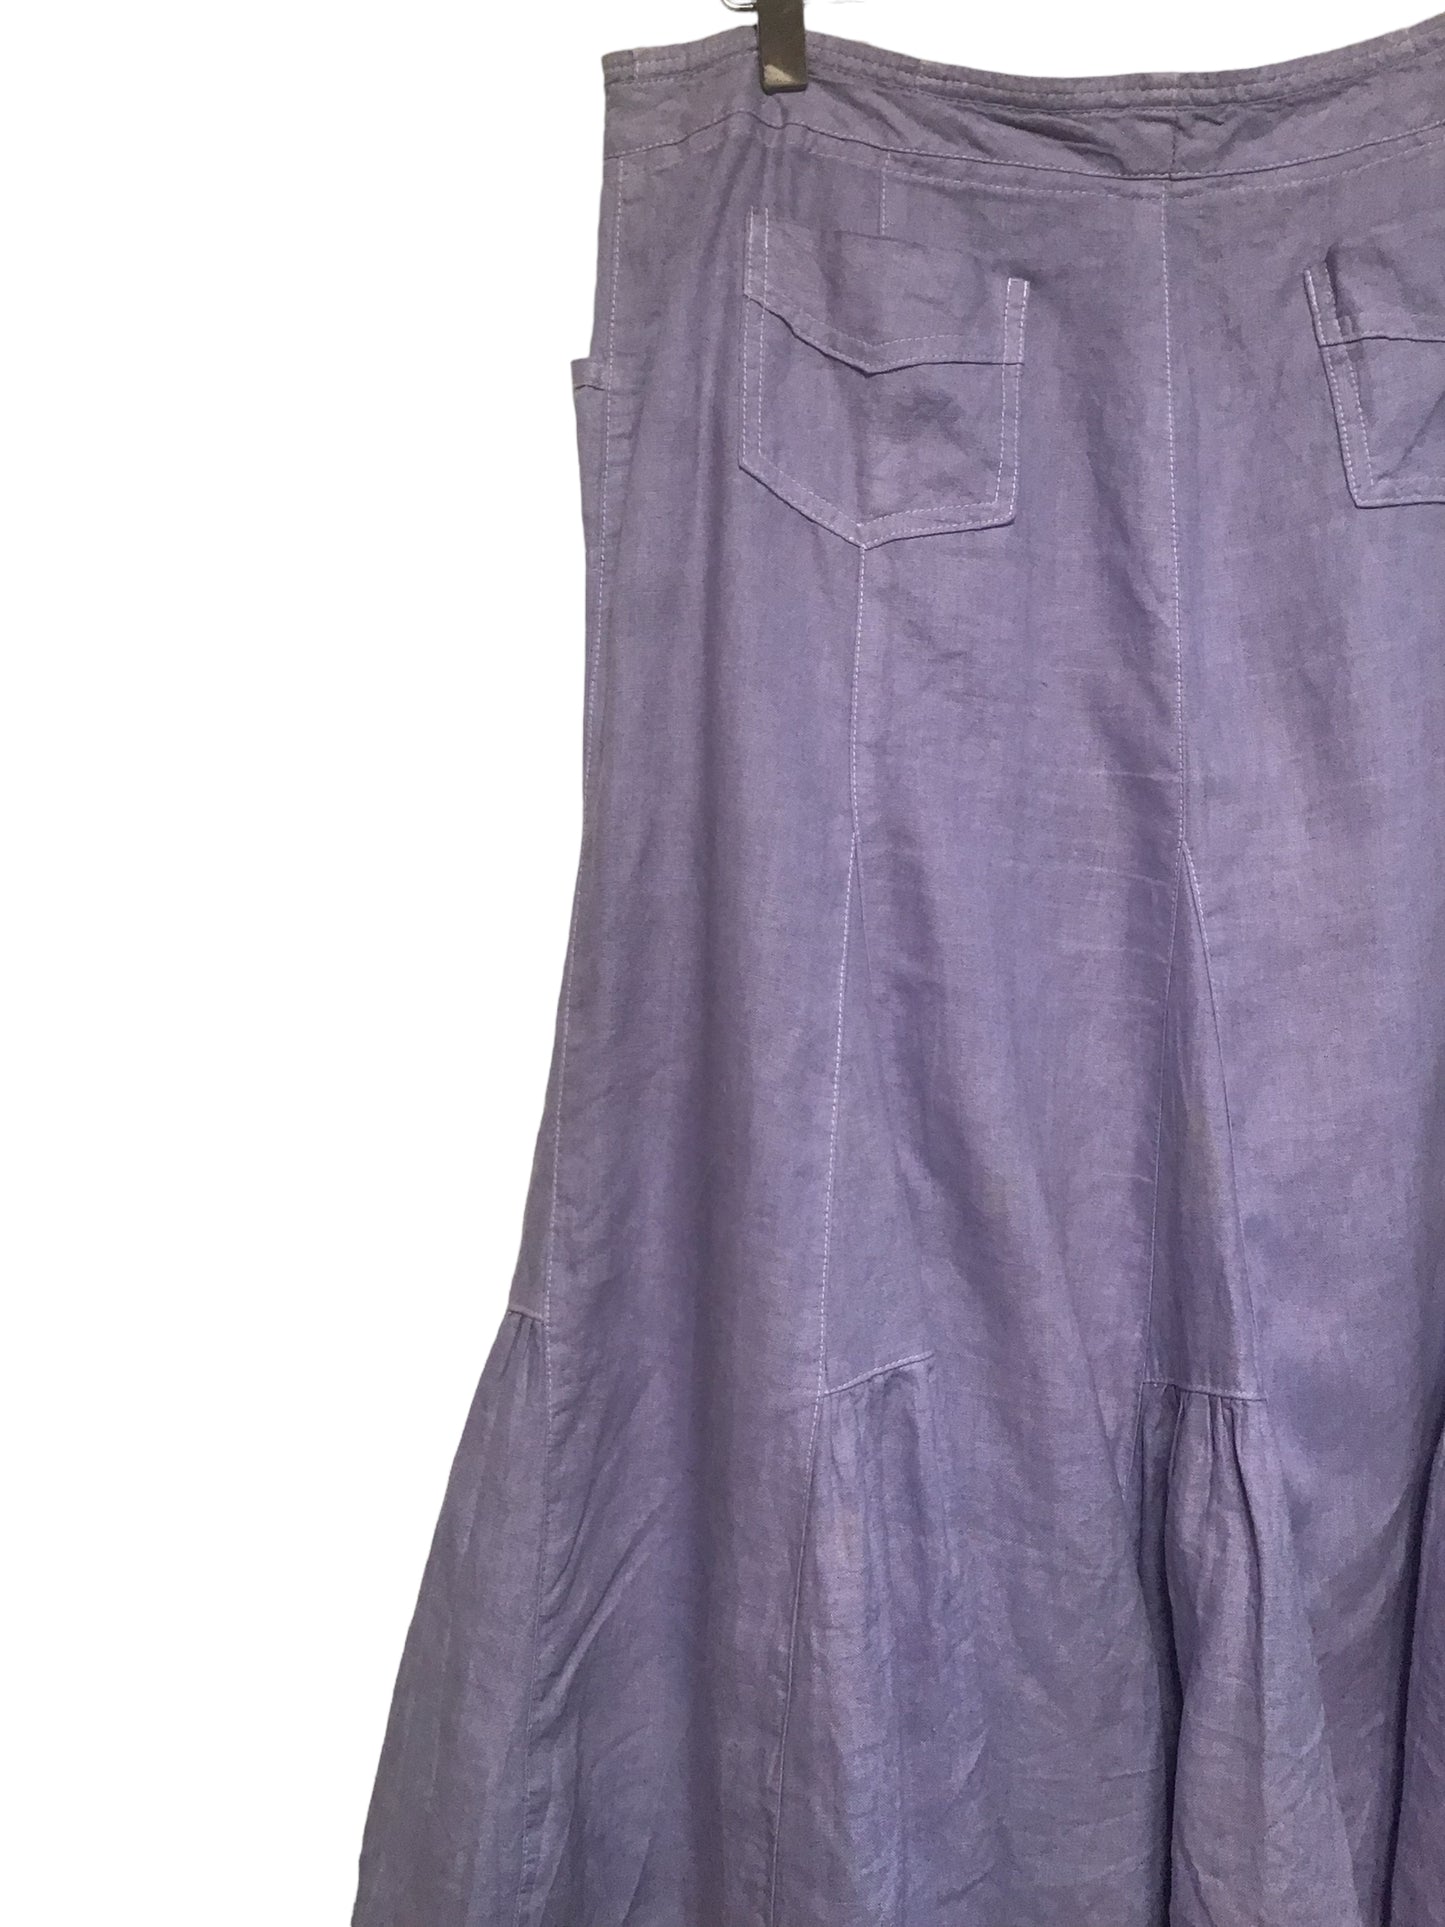 Gerard Darel Linen Skirt (Size L)